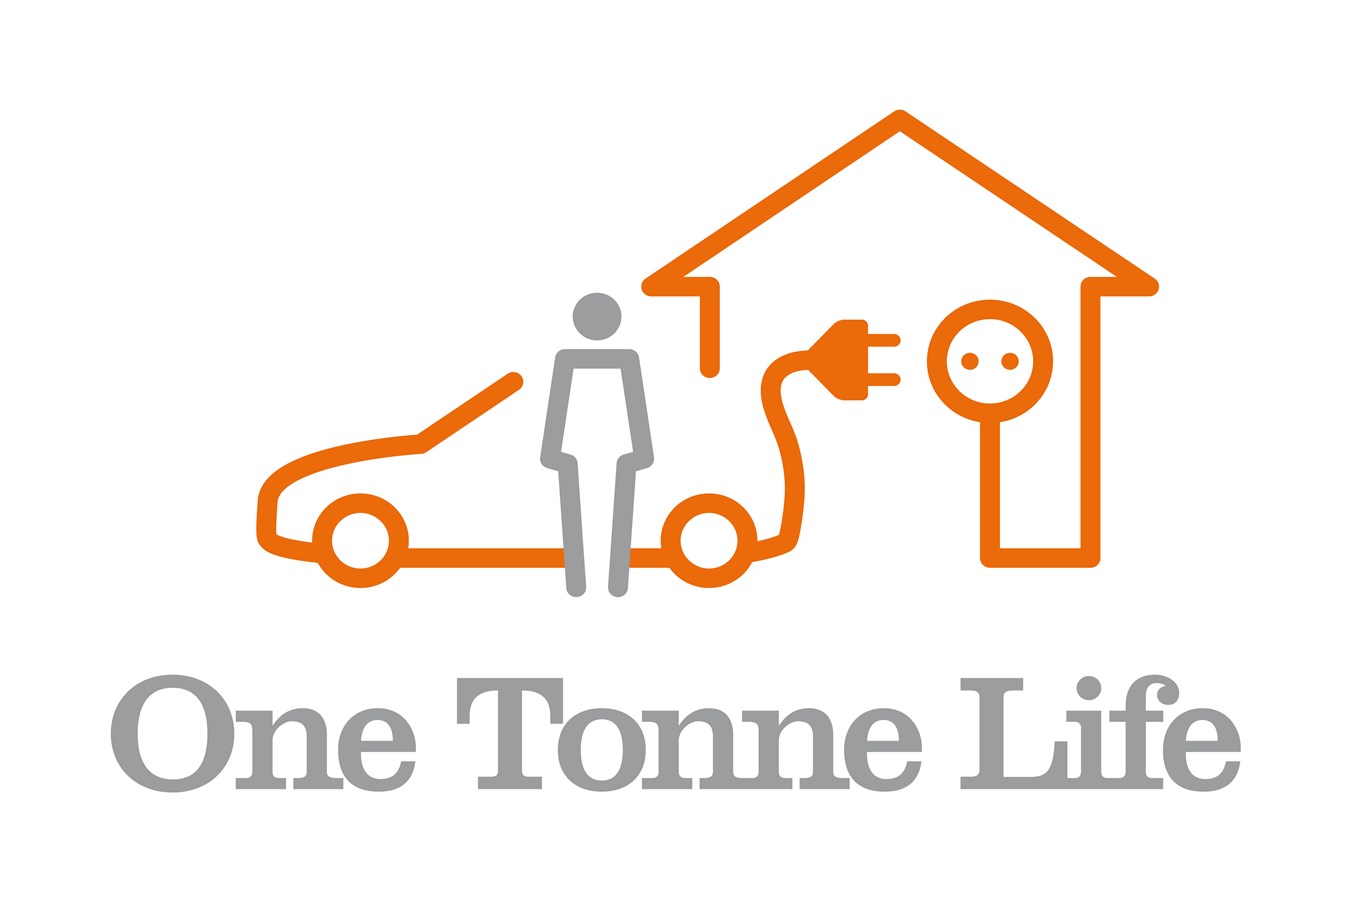 "One Tonne Life" Symbol